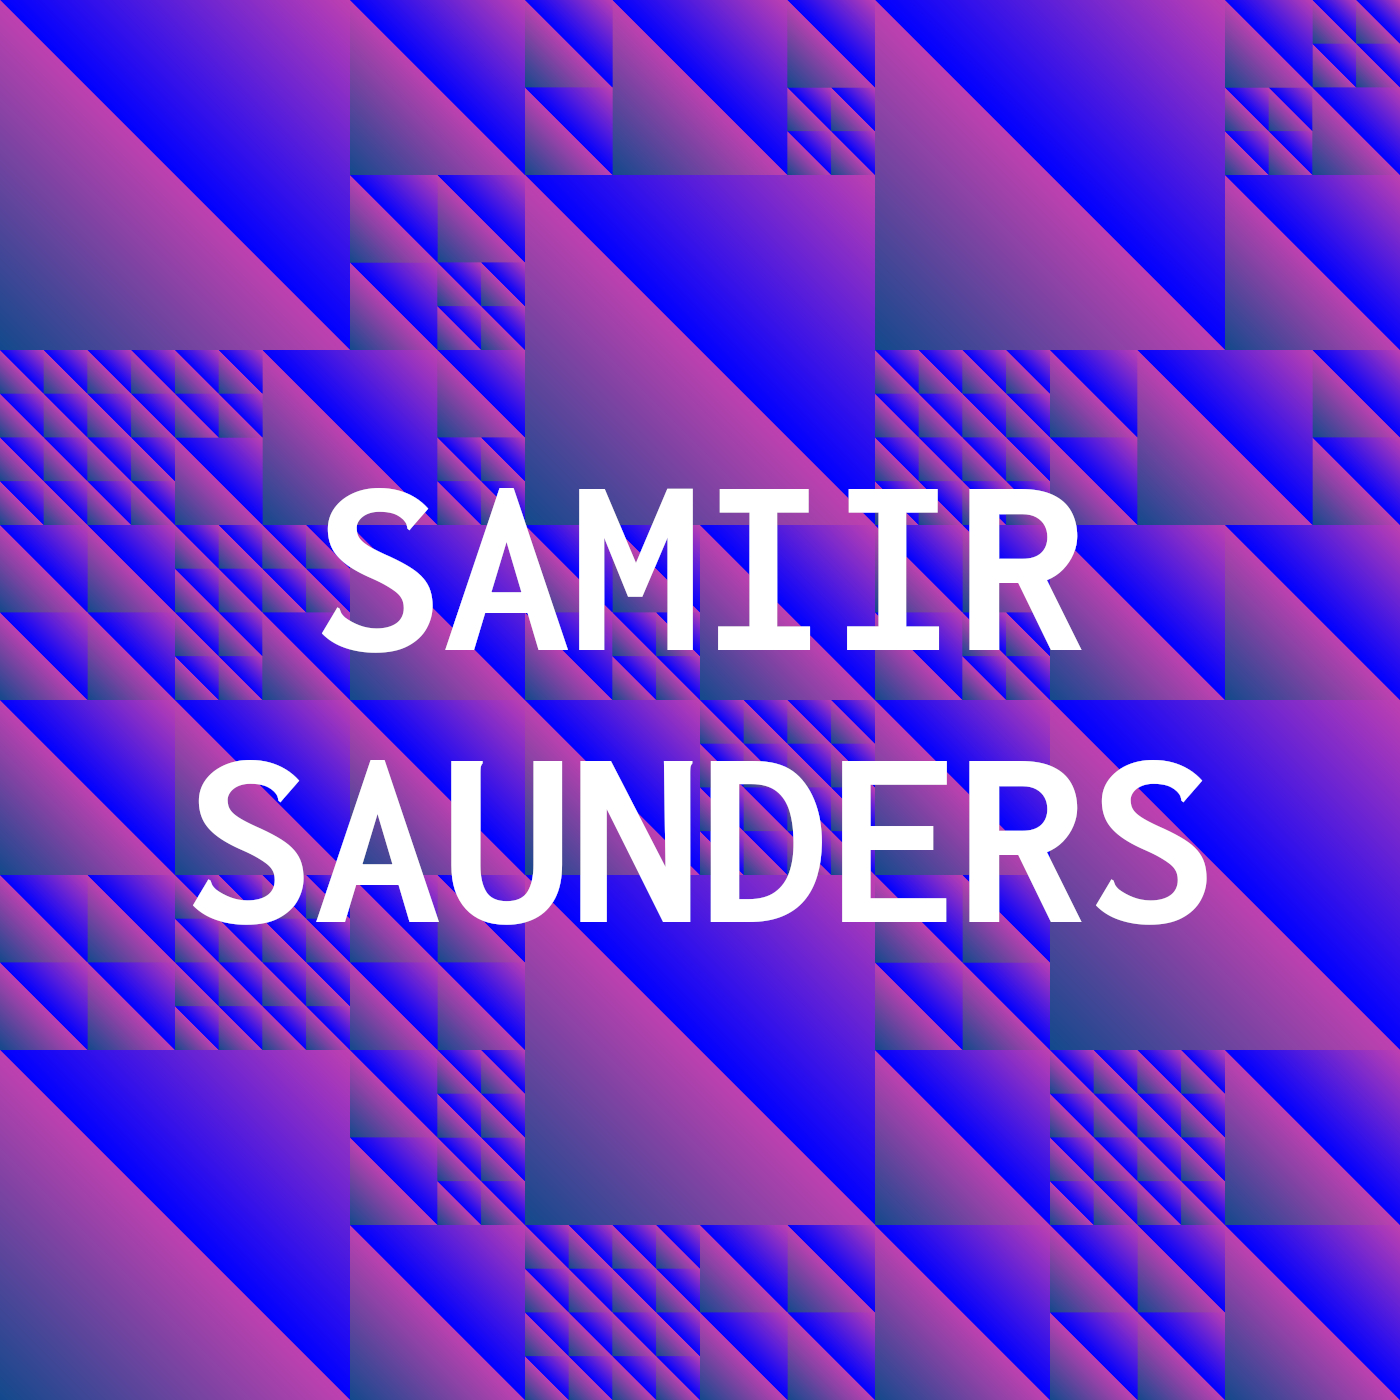 samiir_saunders